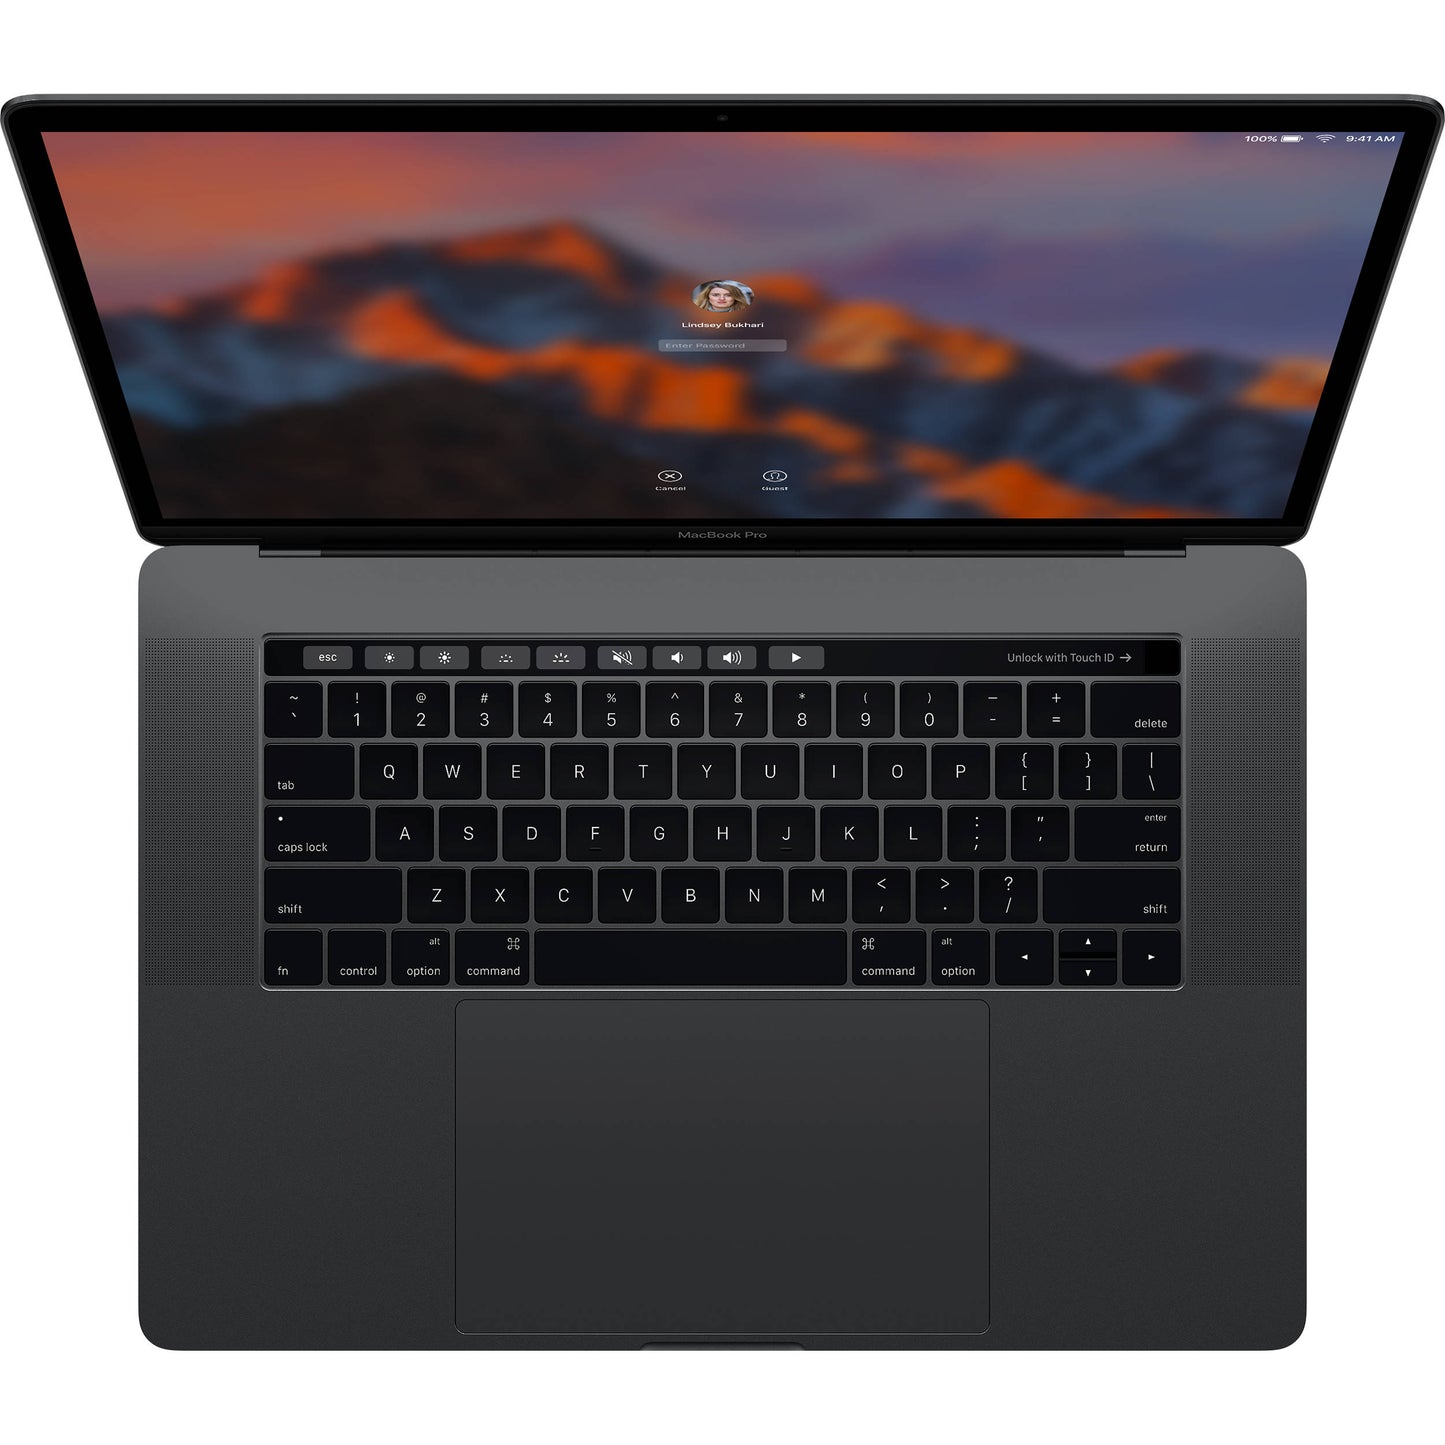 apple-late-2016-15.4-inch-macbook-pro-touchbar-a1707-space-gray-qci7 - 2.6ghz processor, 16gb ram, pro 450 - 2gb gpu-mlh32ll/a-2